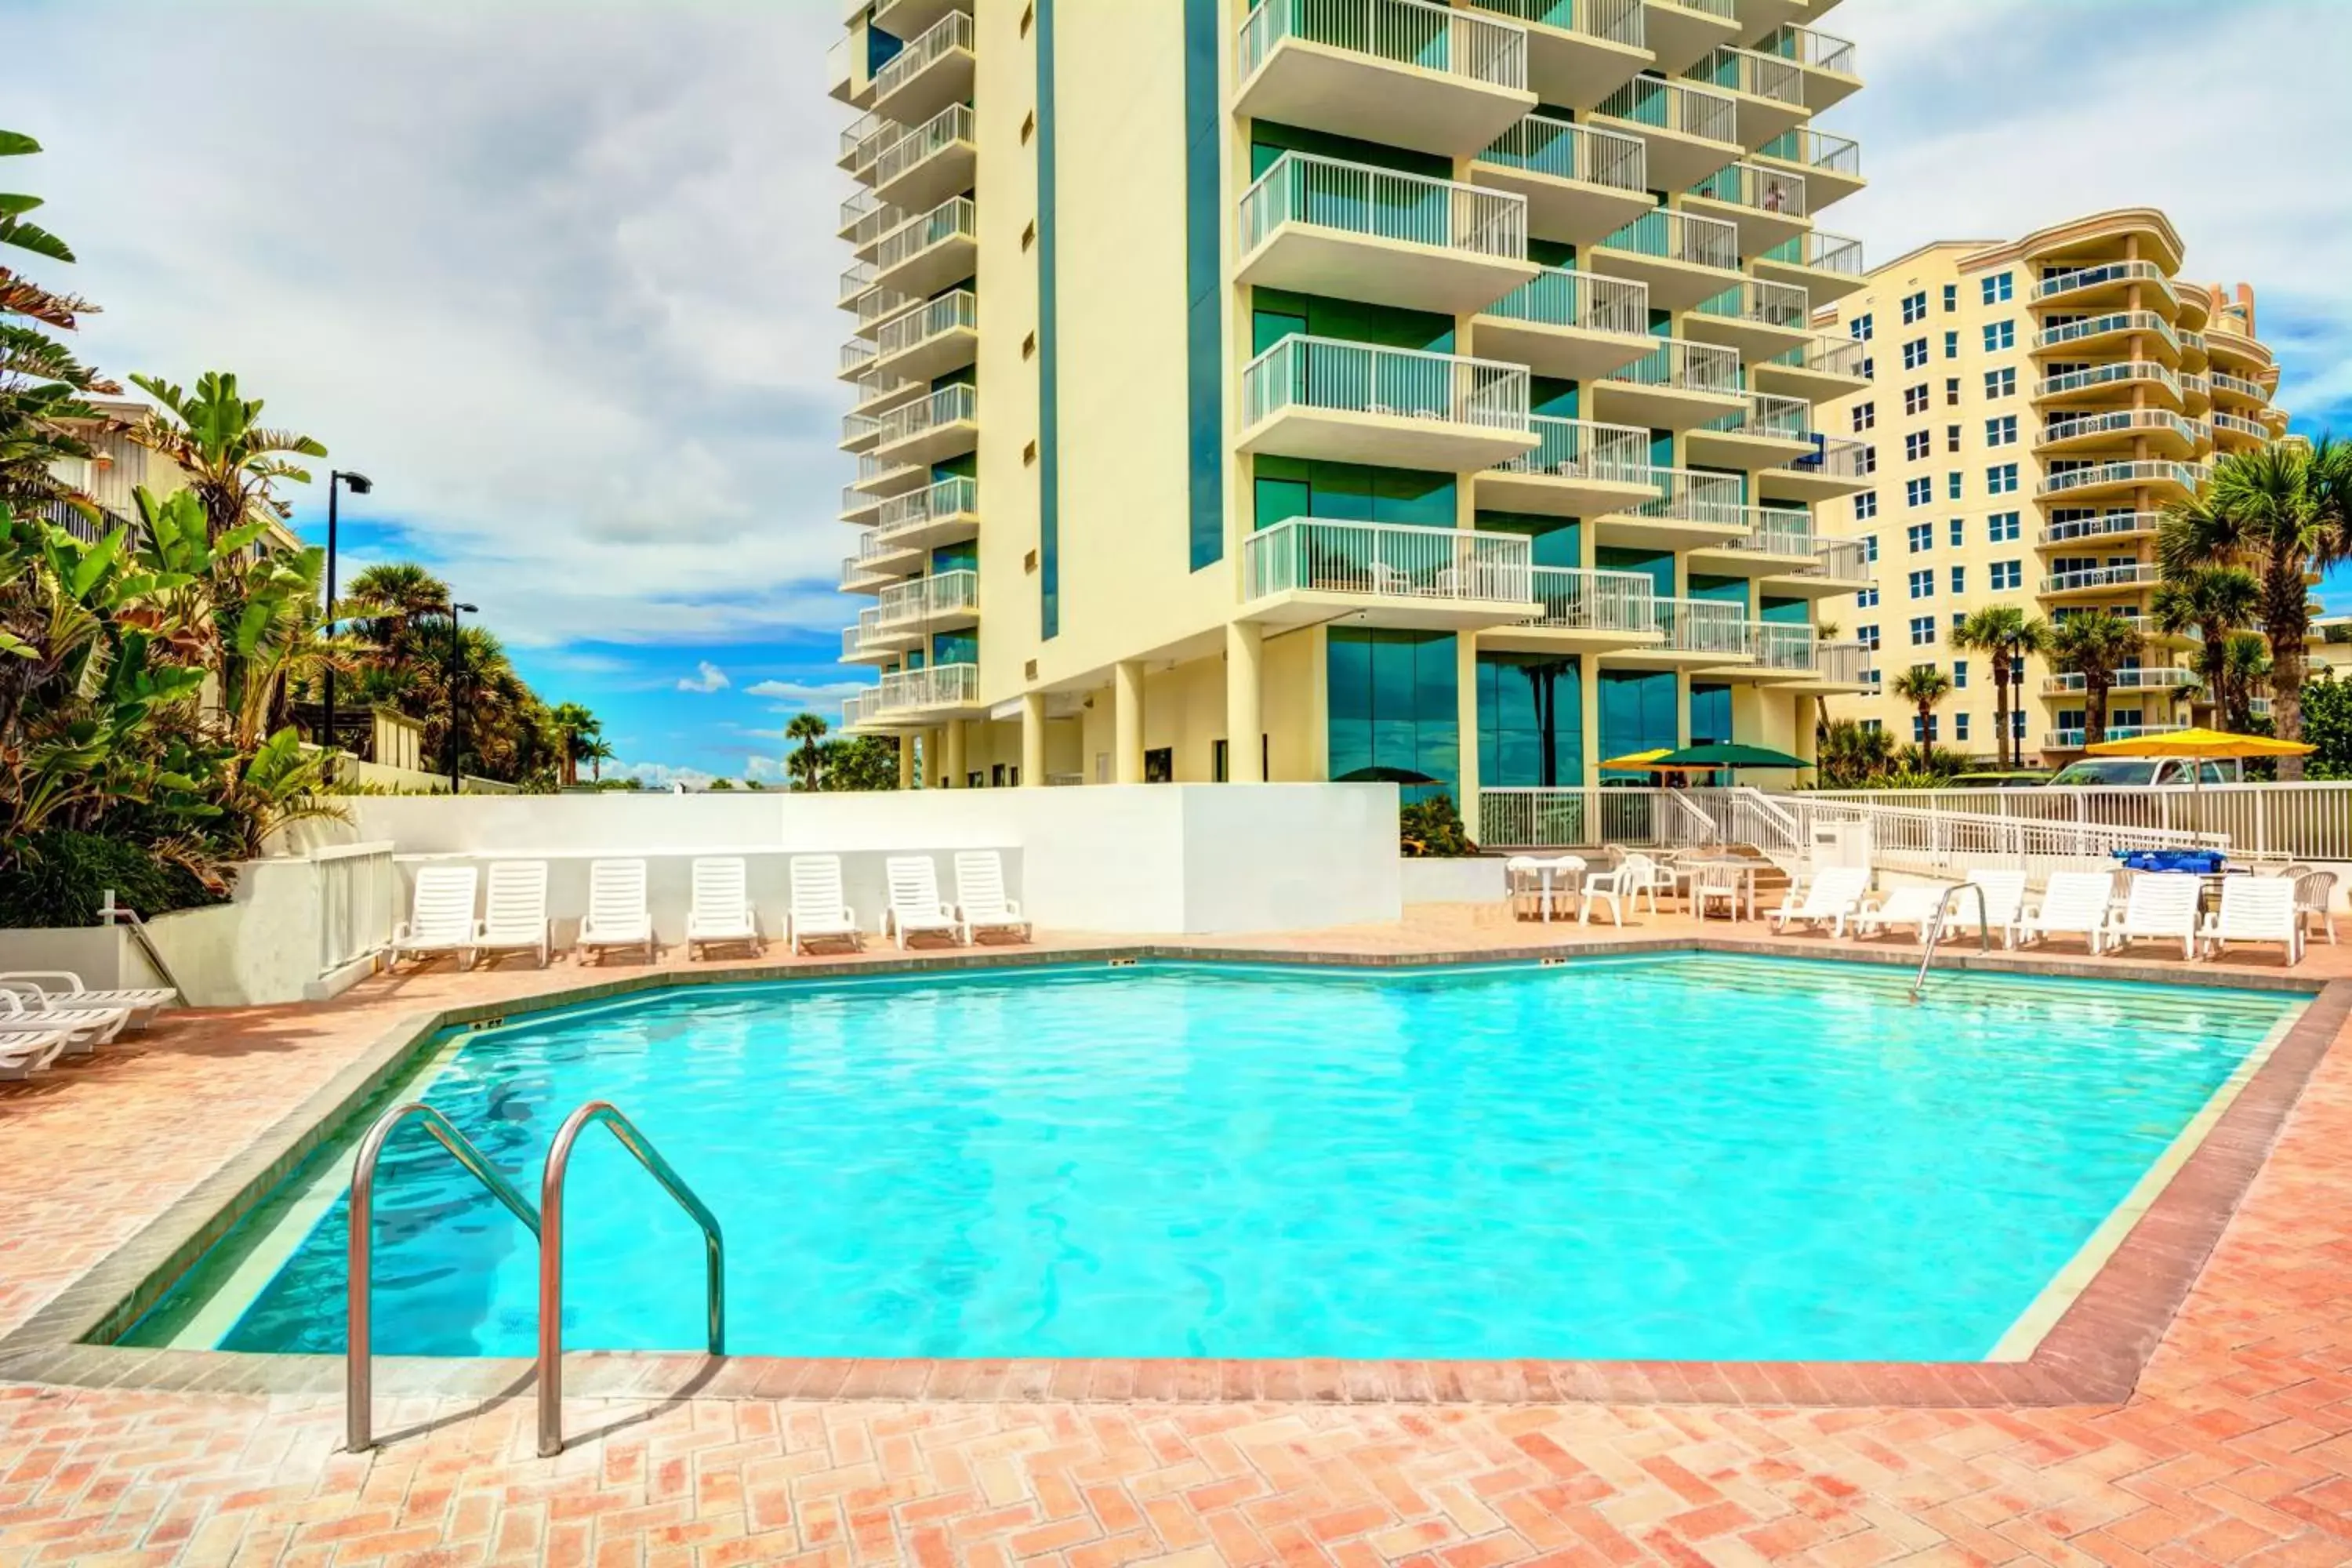 Swimming Pool in Bahama House - Daytona Beach Shores